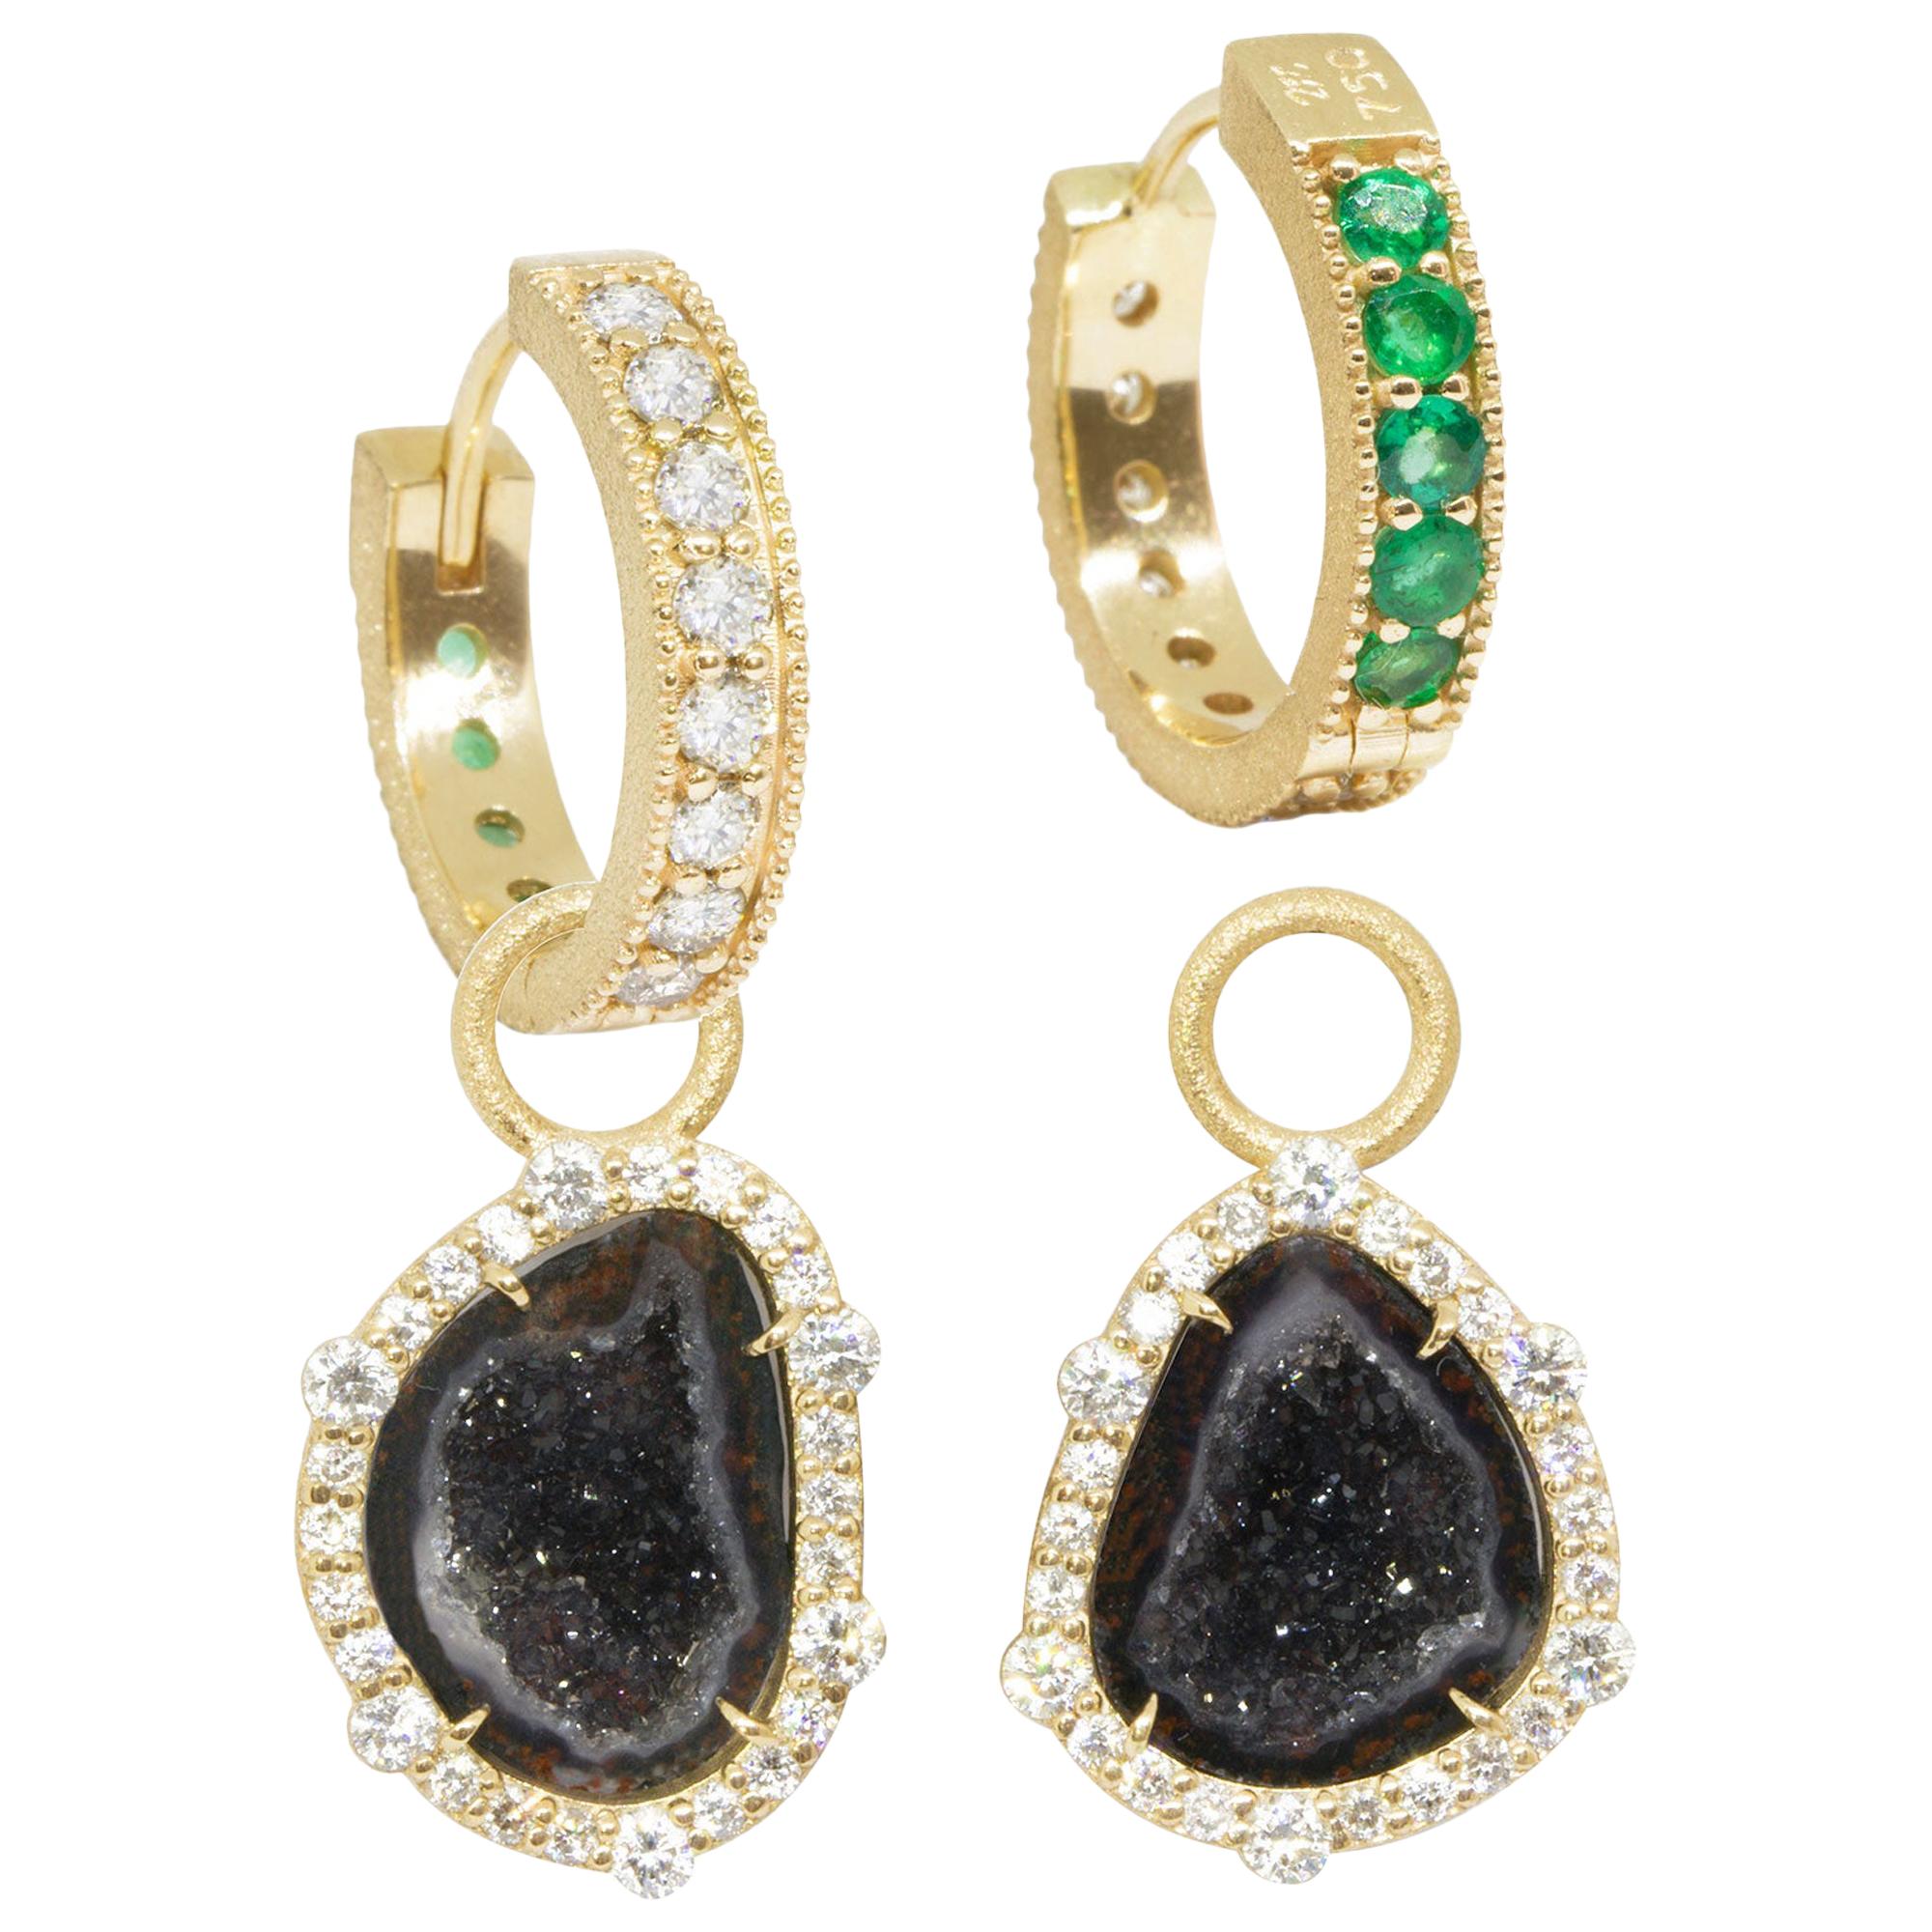 Geode Charms and Intricate 18 Karat Gold Reversible Huggies Earrings